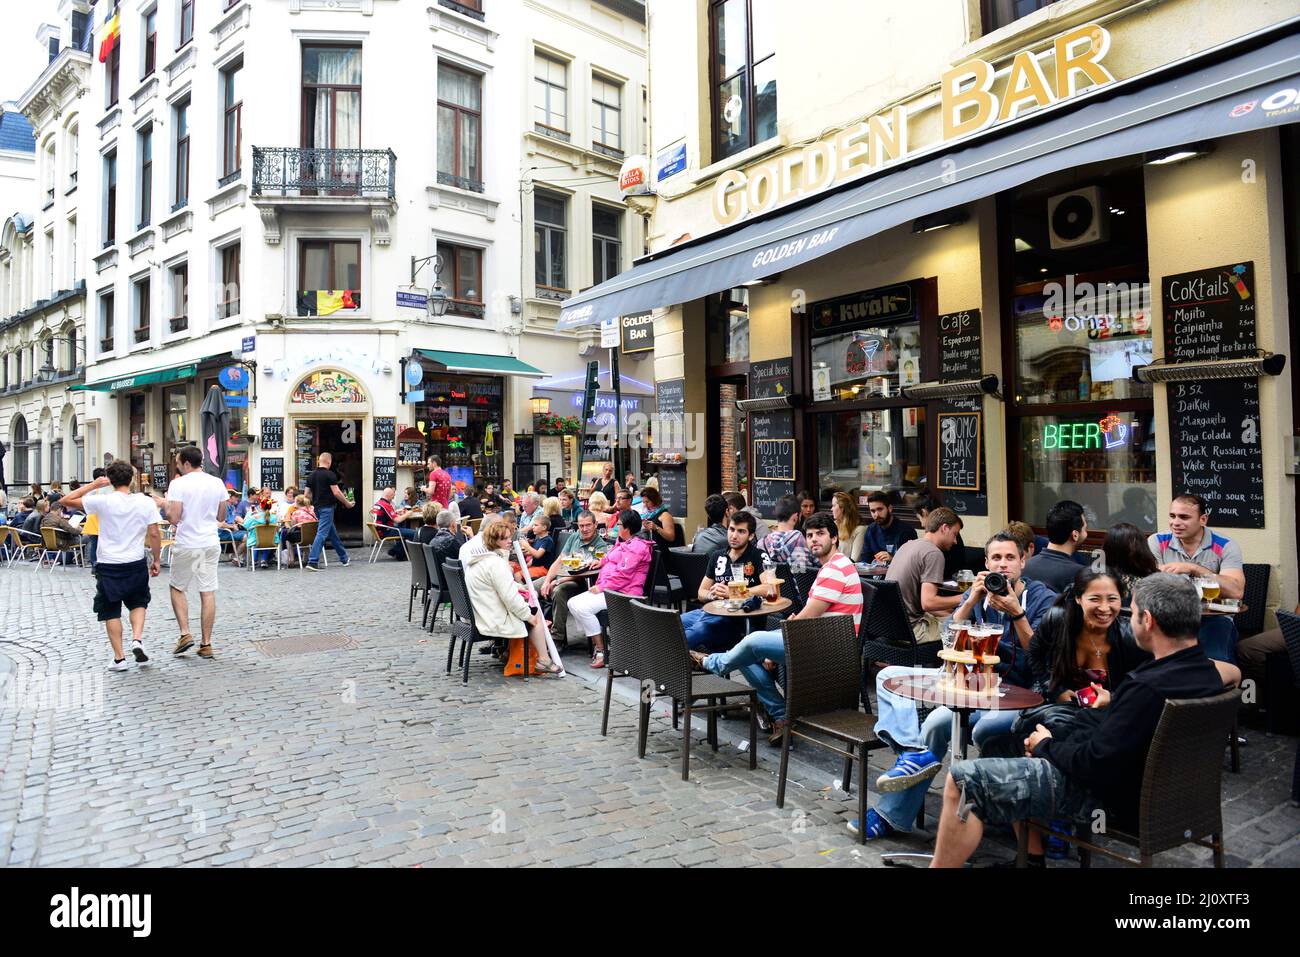 Golden Bar on Rue des Chapeliers in Brussels, Belgium Stock Photo - Alamy